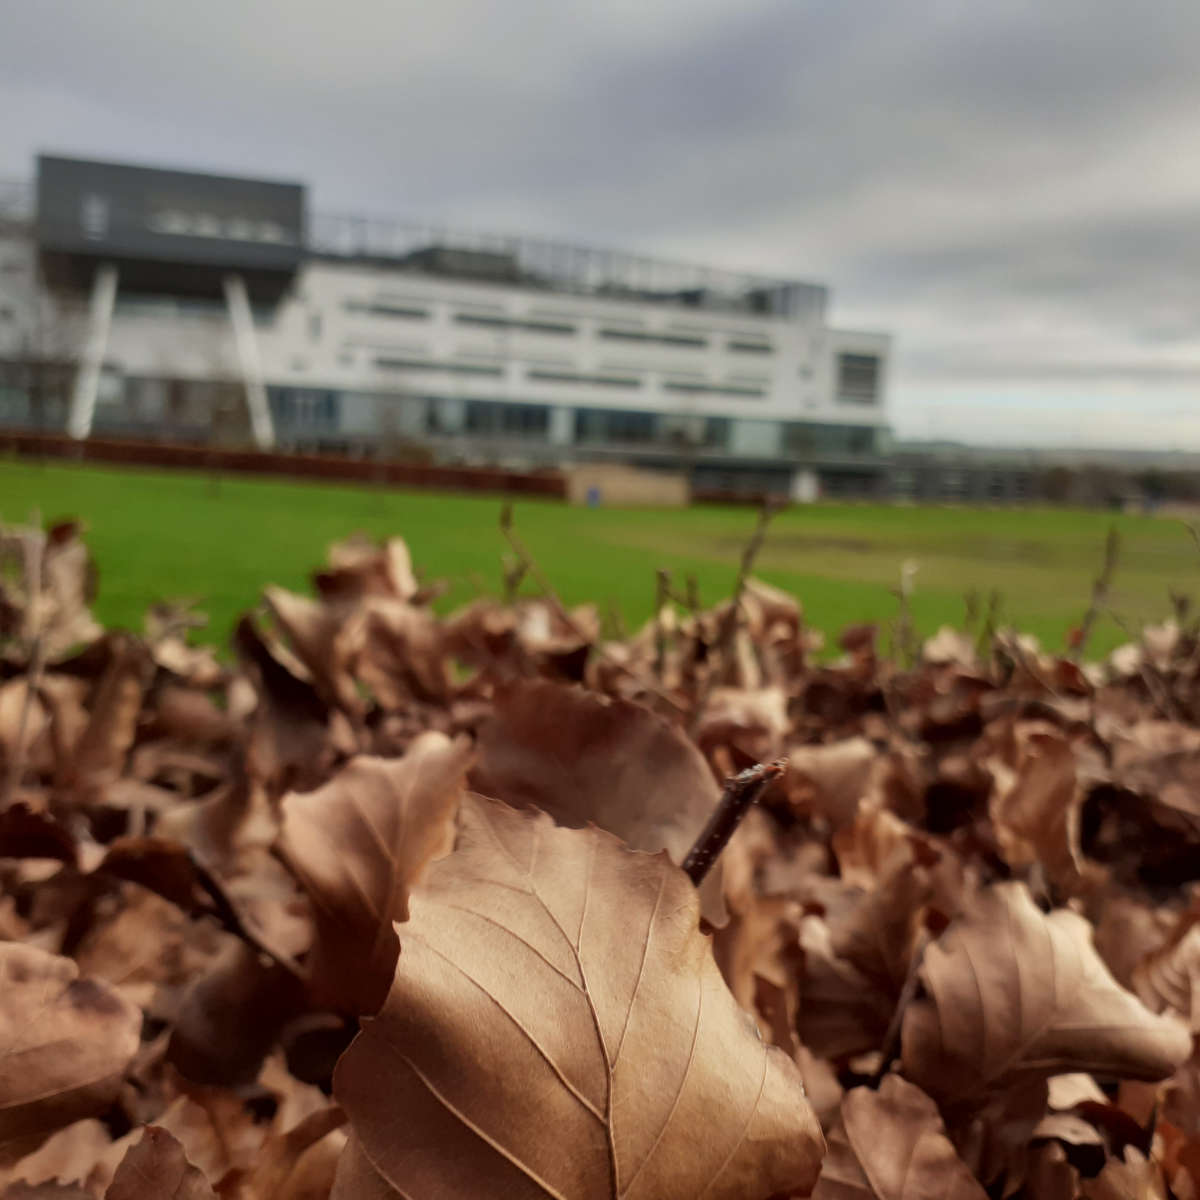 Autumn leaves on the ground at Queen Margaret University, Edinburgh